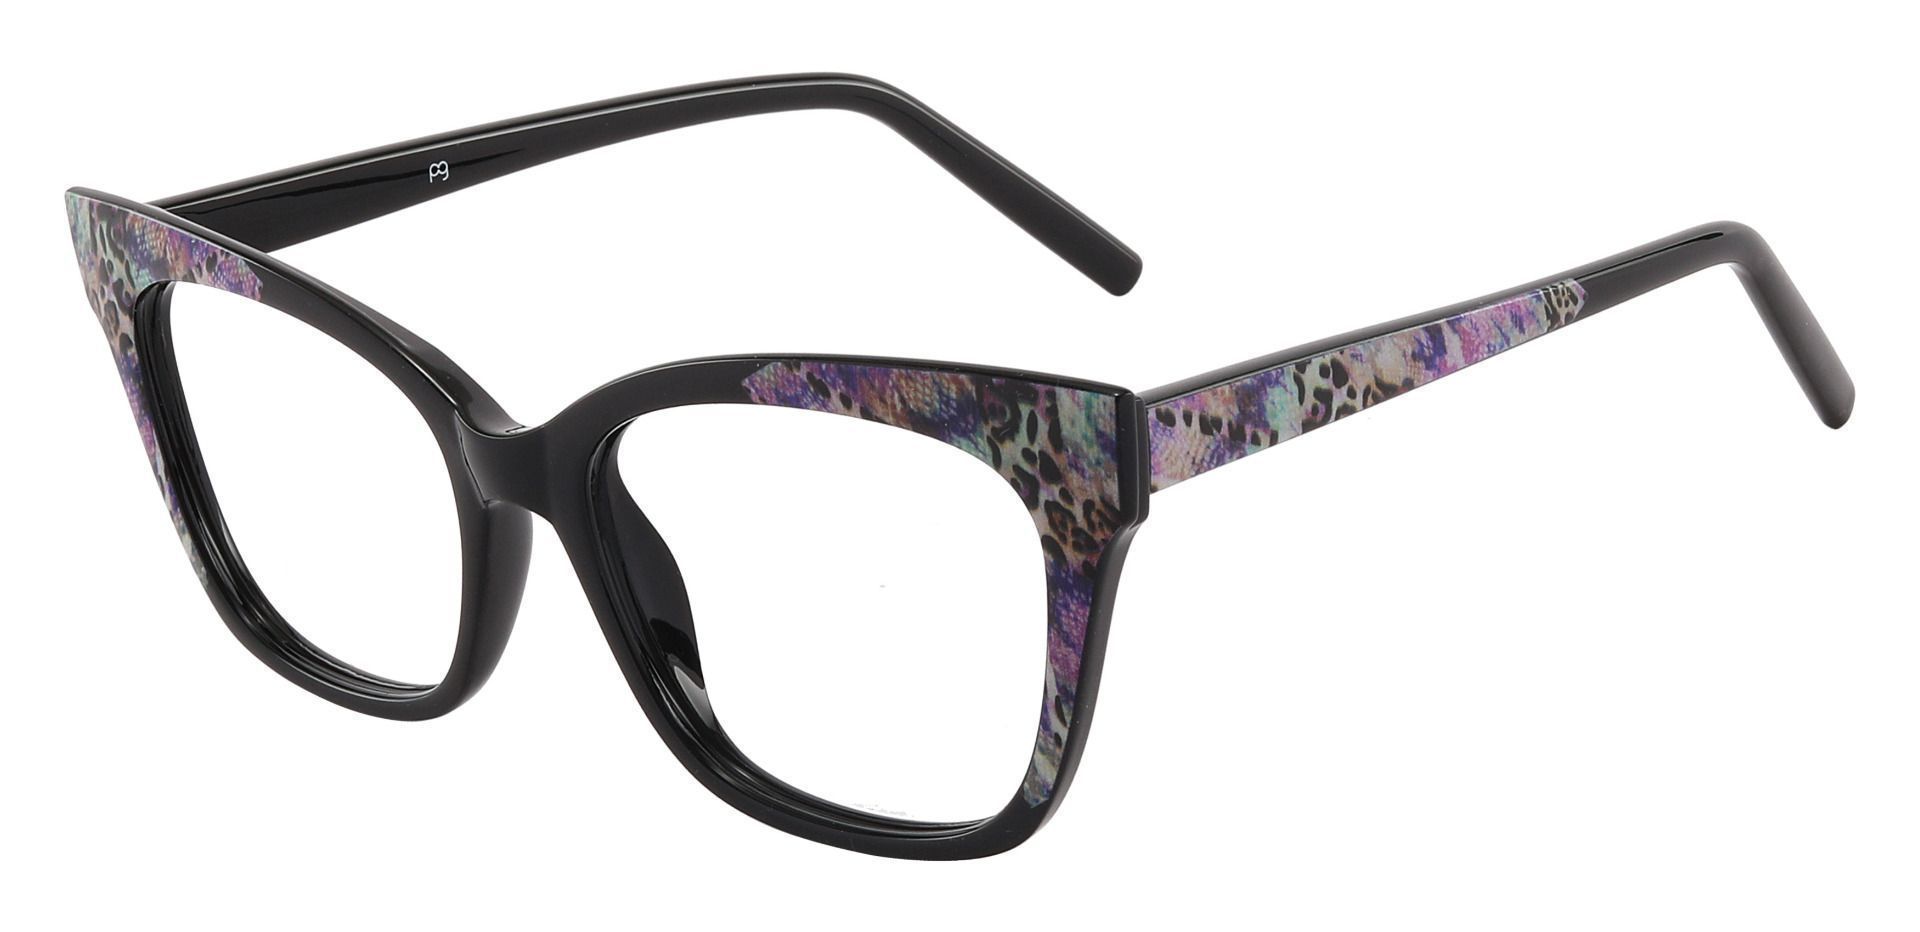 Hera Cat Eye Prescription Glasses - Black